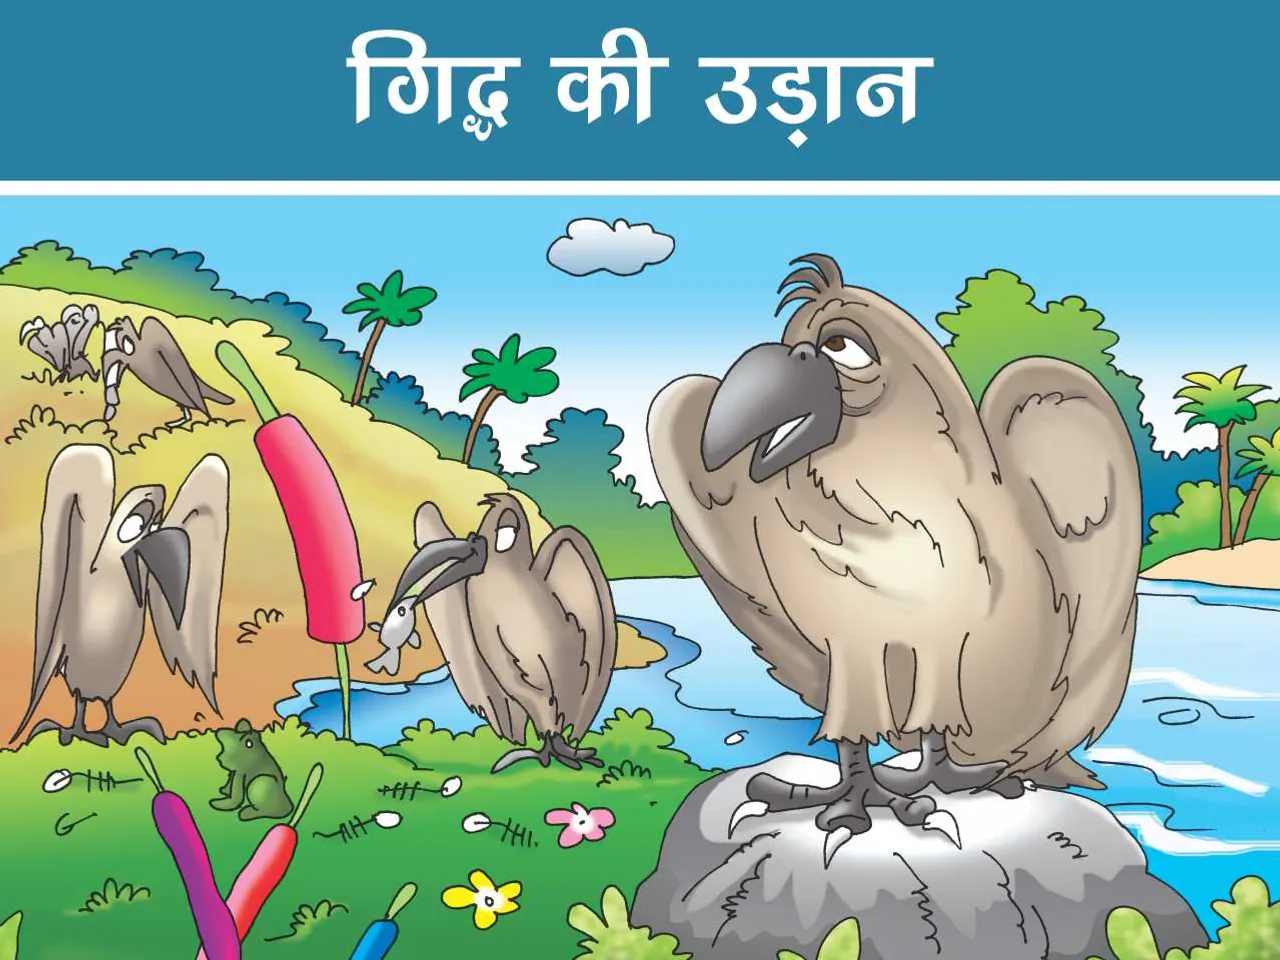 Vultures cartoon image